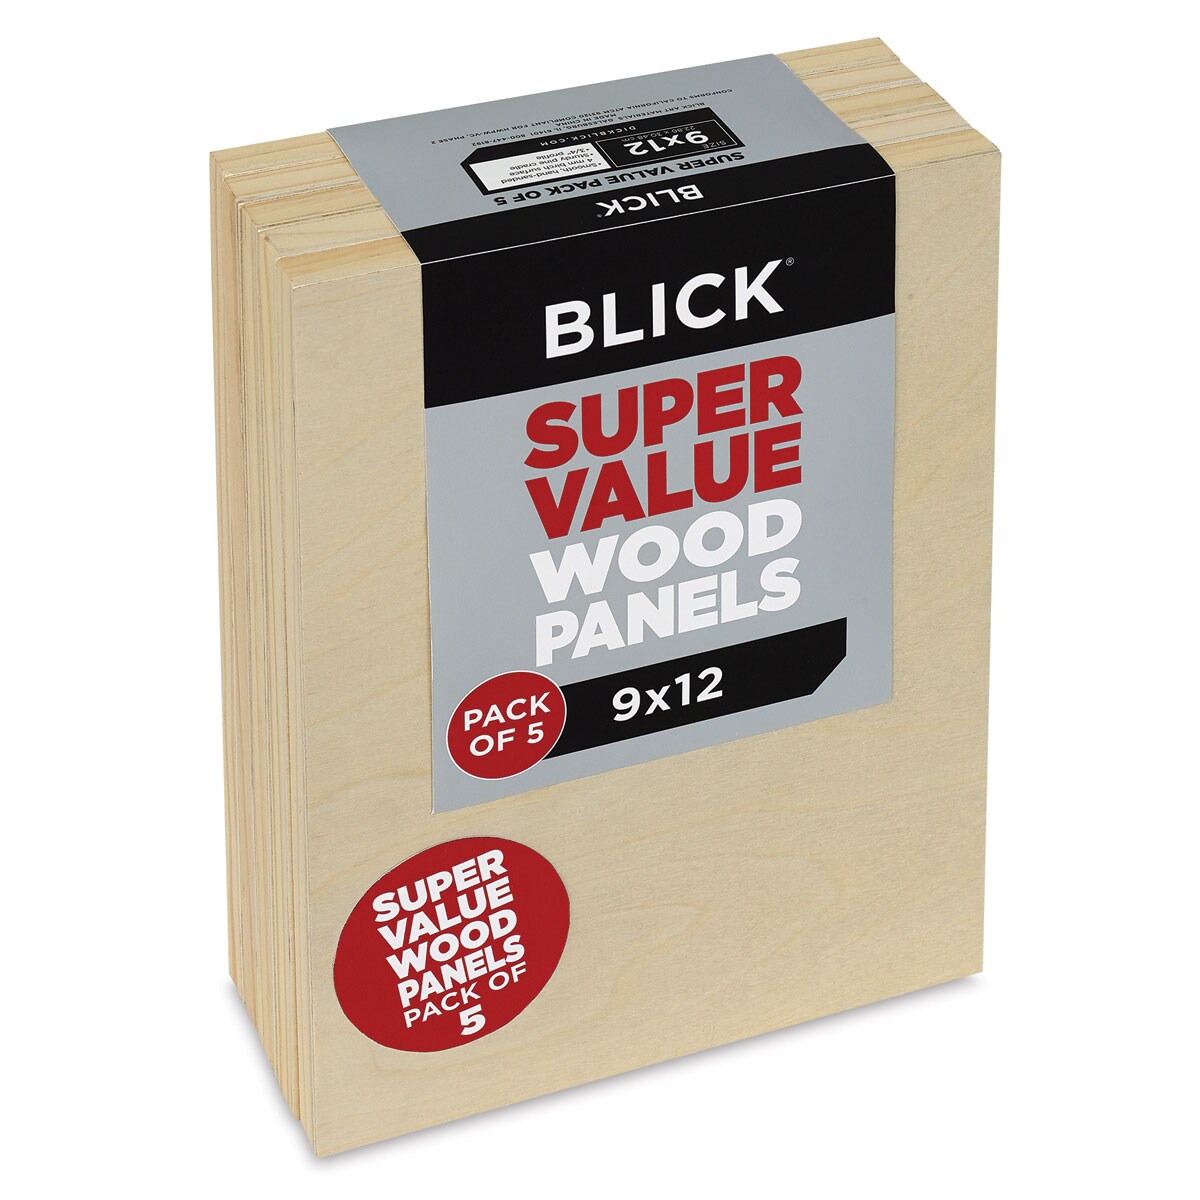 Blick Super Value Wood Panel Pack - 9&#x22; x 12&#x22;, Pkg of 5